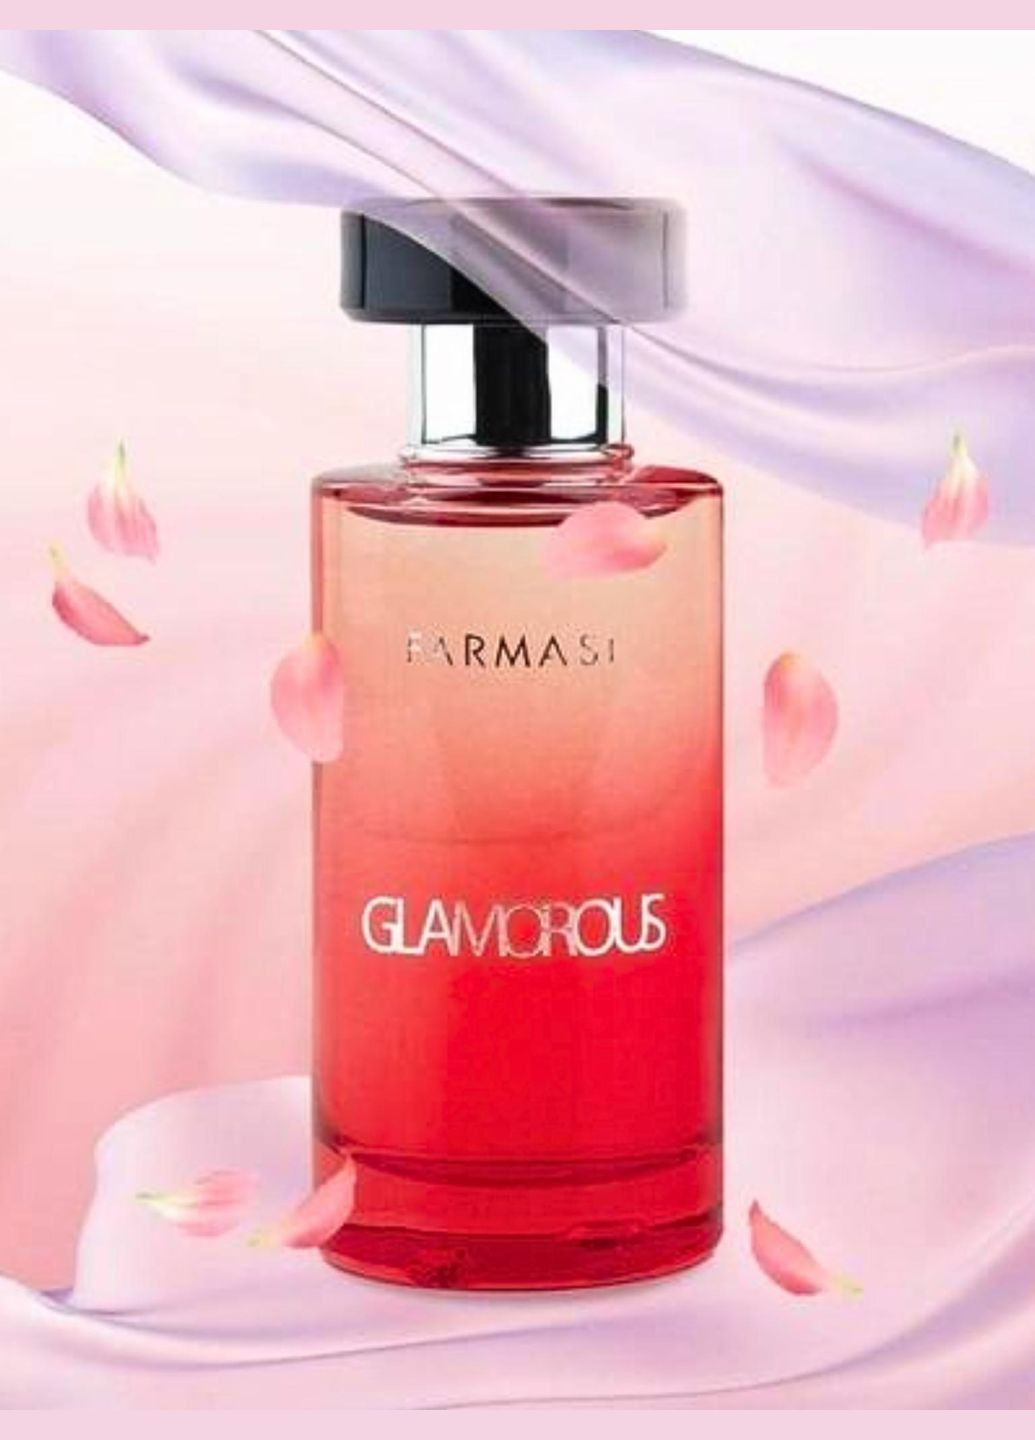 Тестер женской парфюмерной воды Glamorous 1,4 мл Farmasi (292865831)